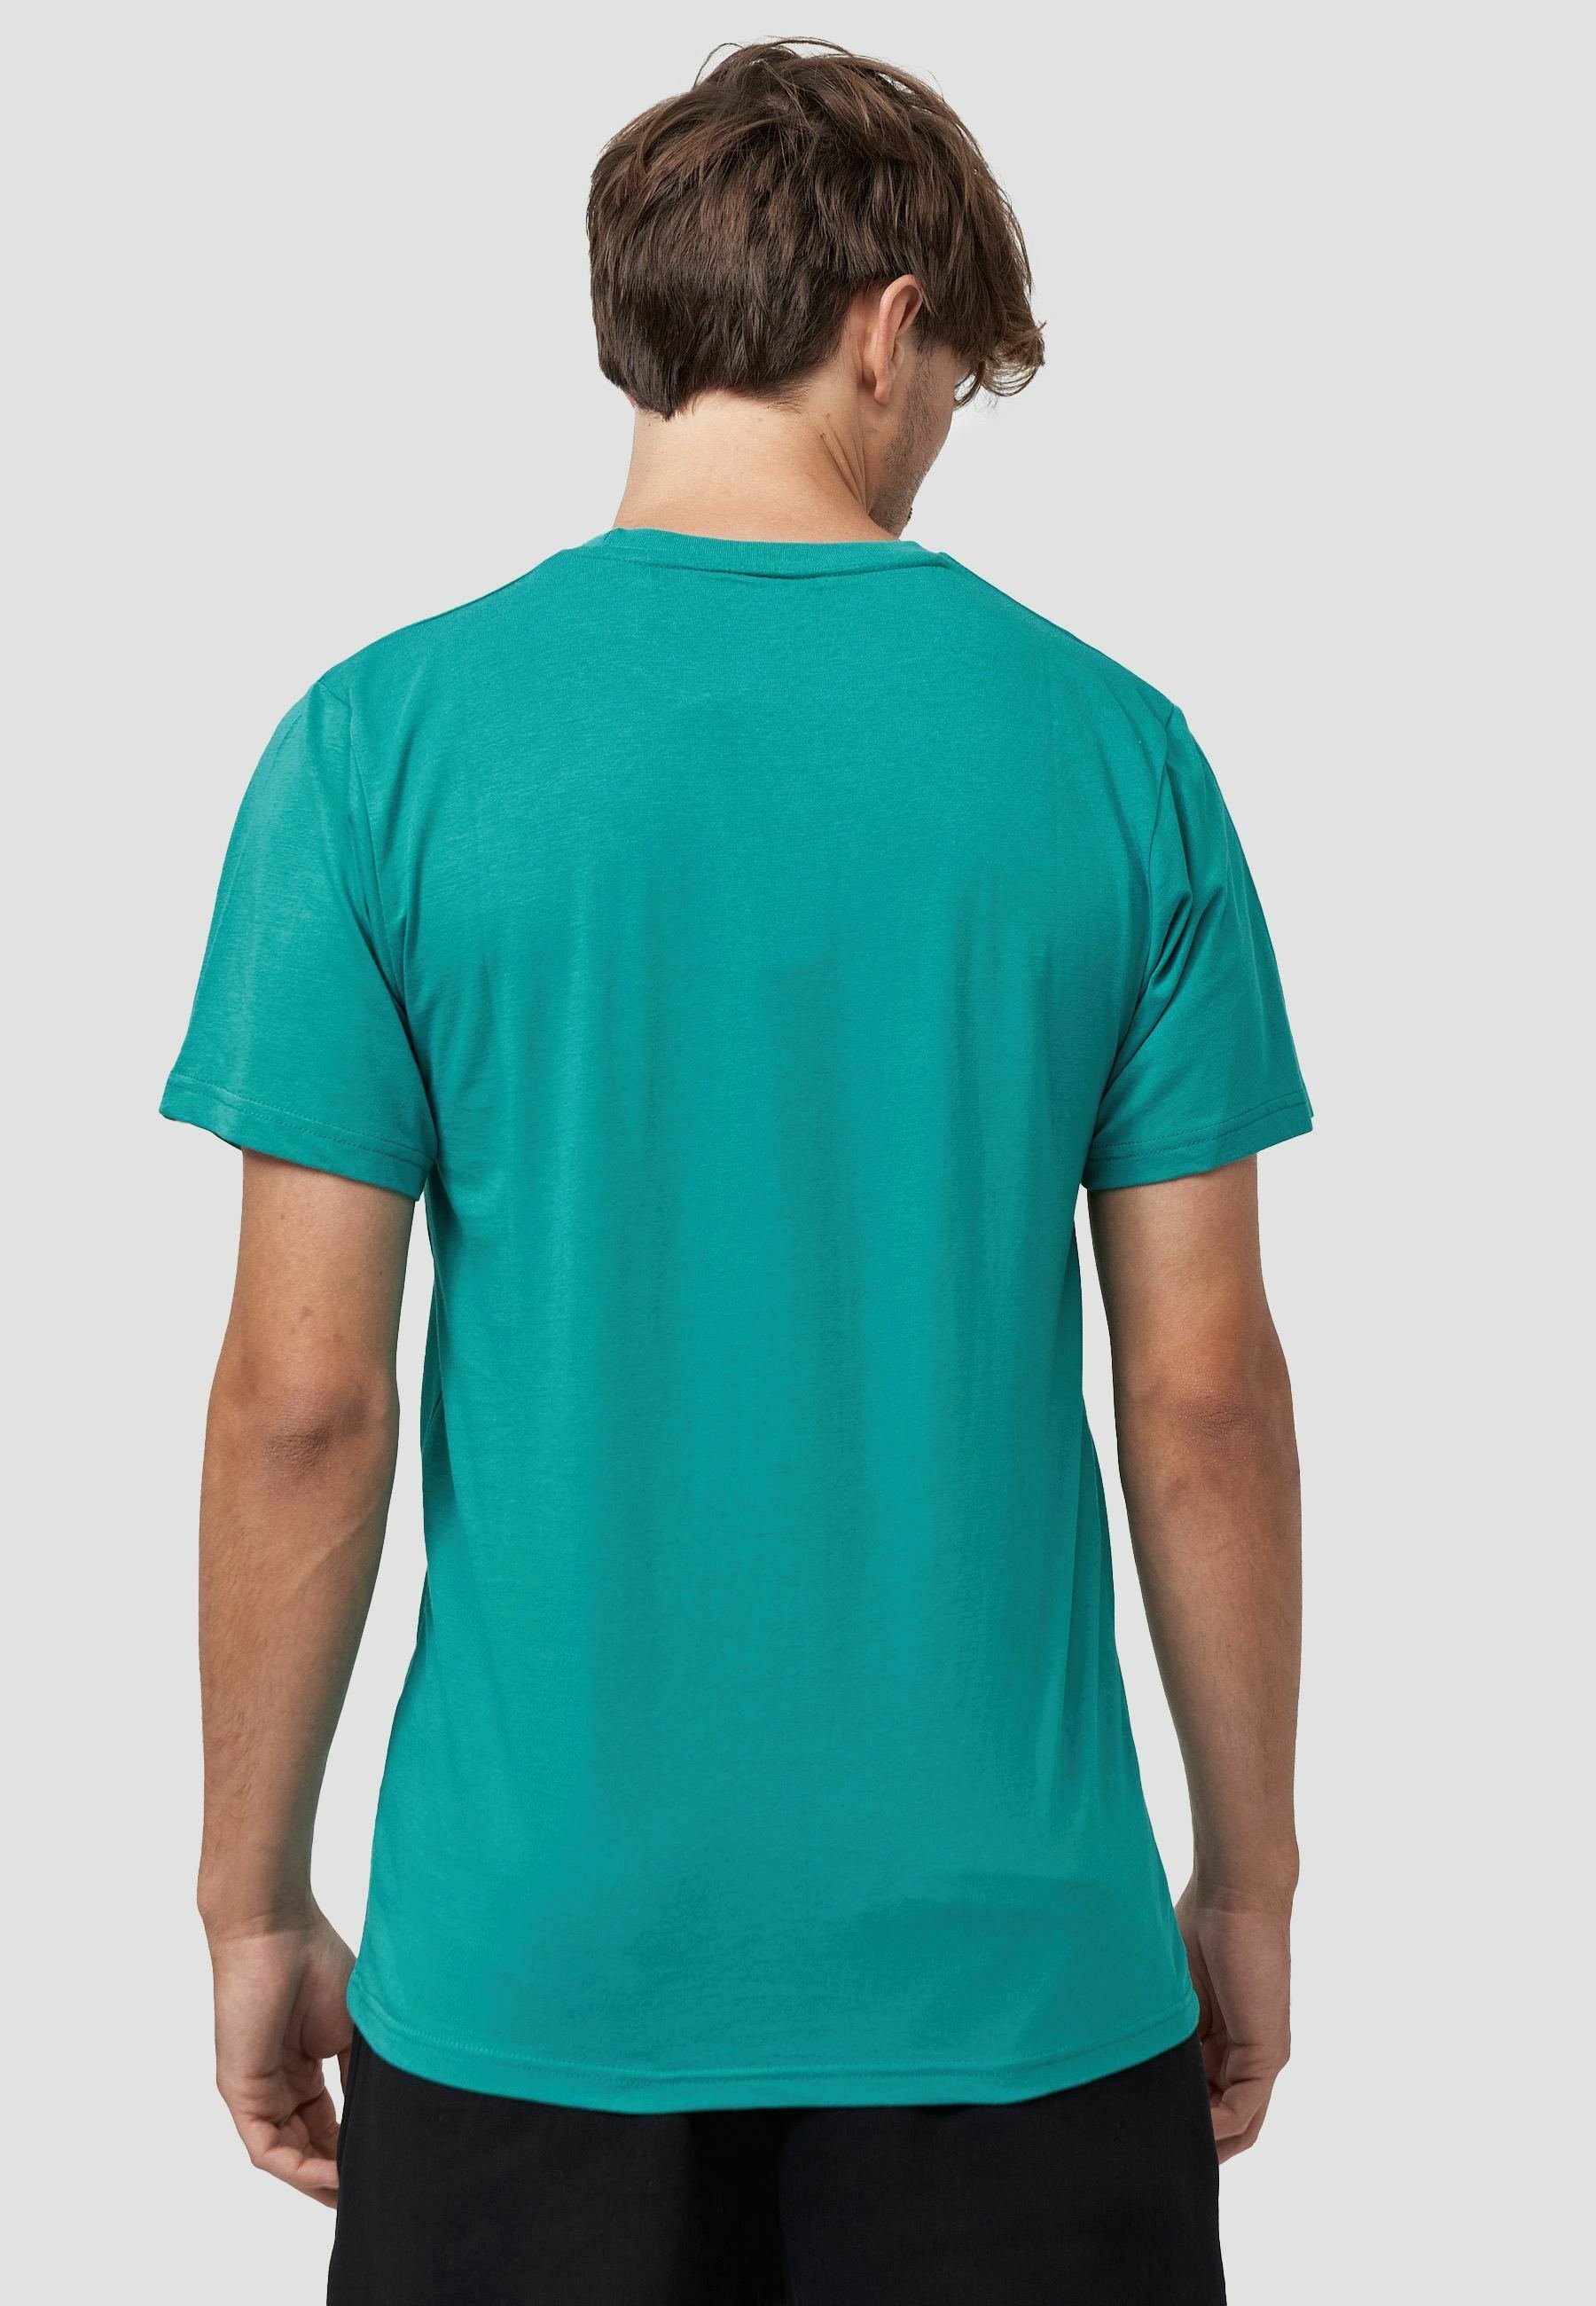 zertifizierte GOTS Türkis MIKON Bio-Baumwolle T-Shirt Sense